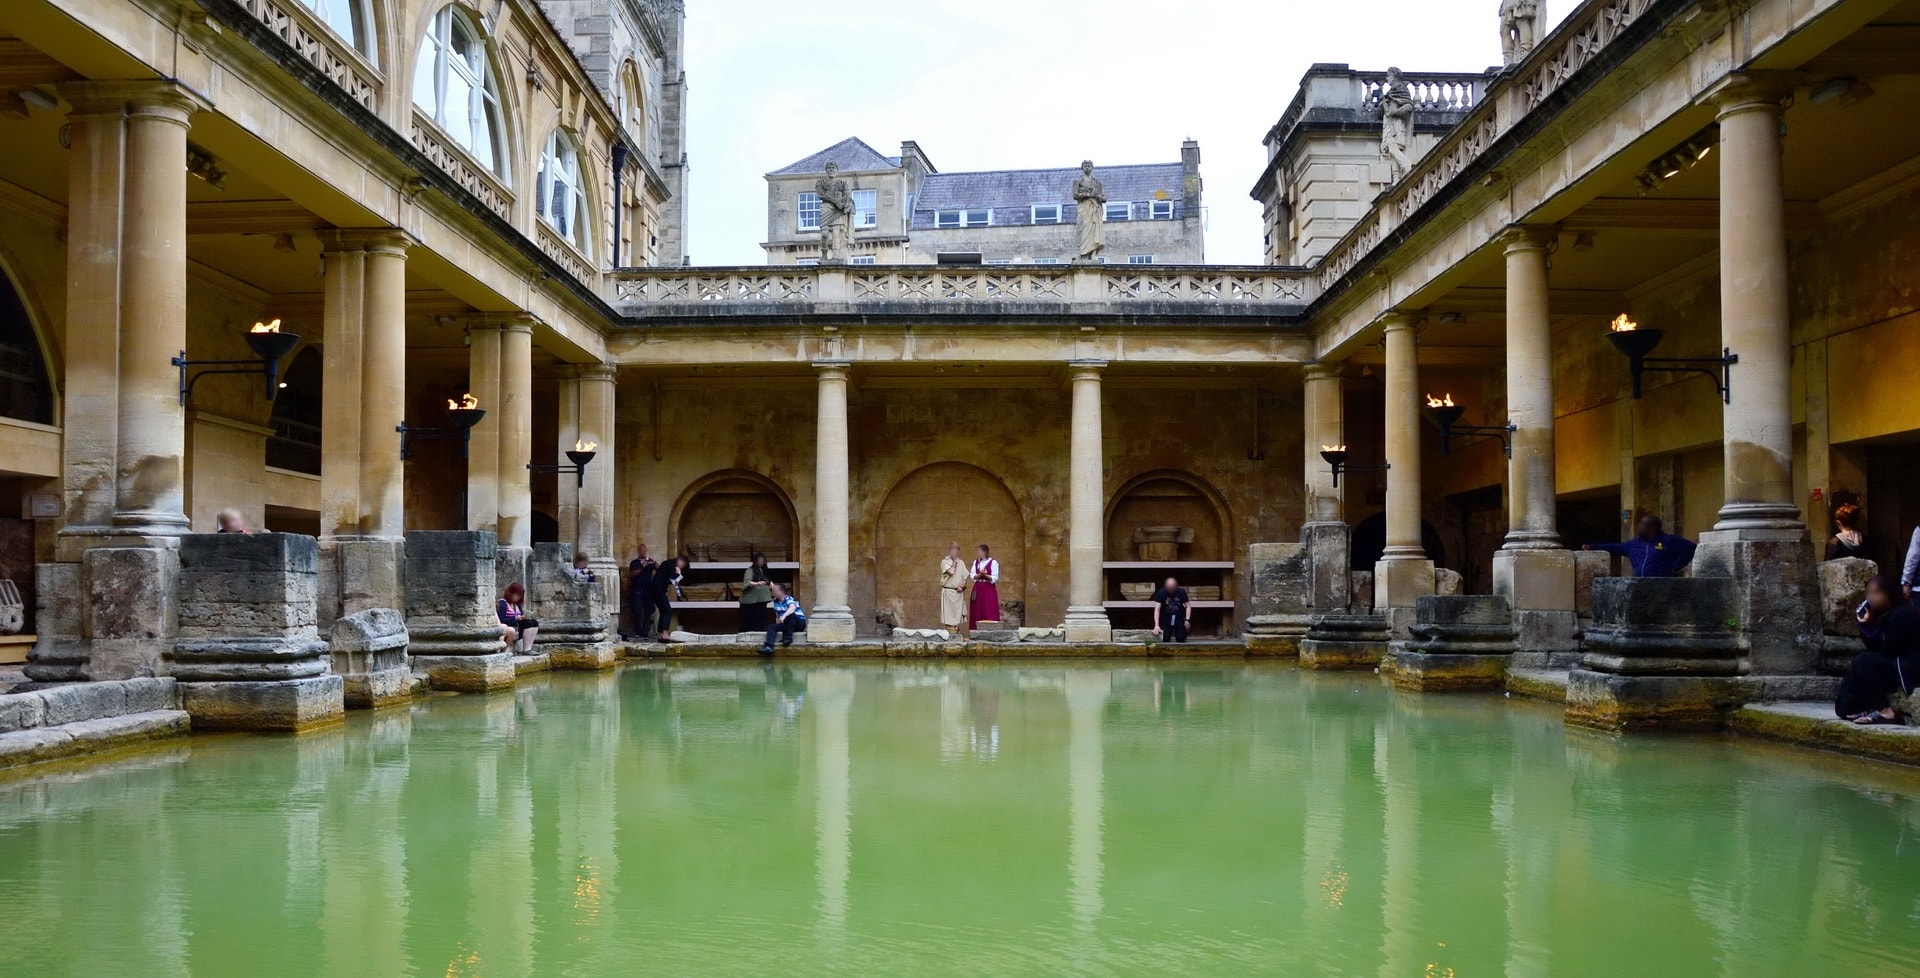 The main part of the Roman Baths